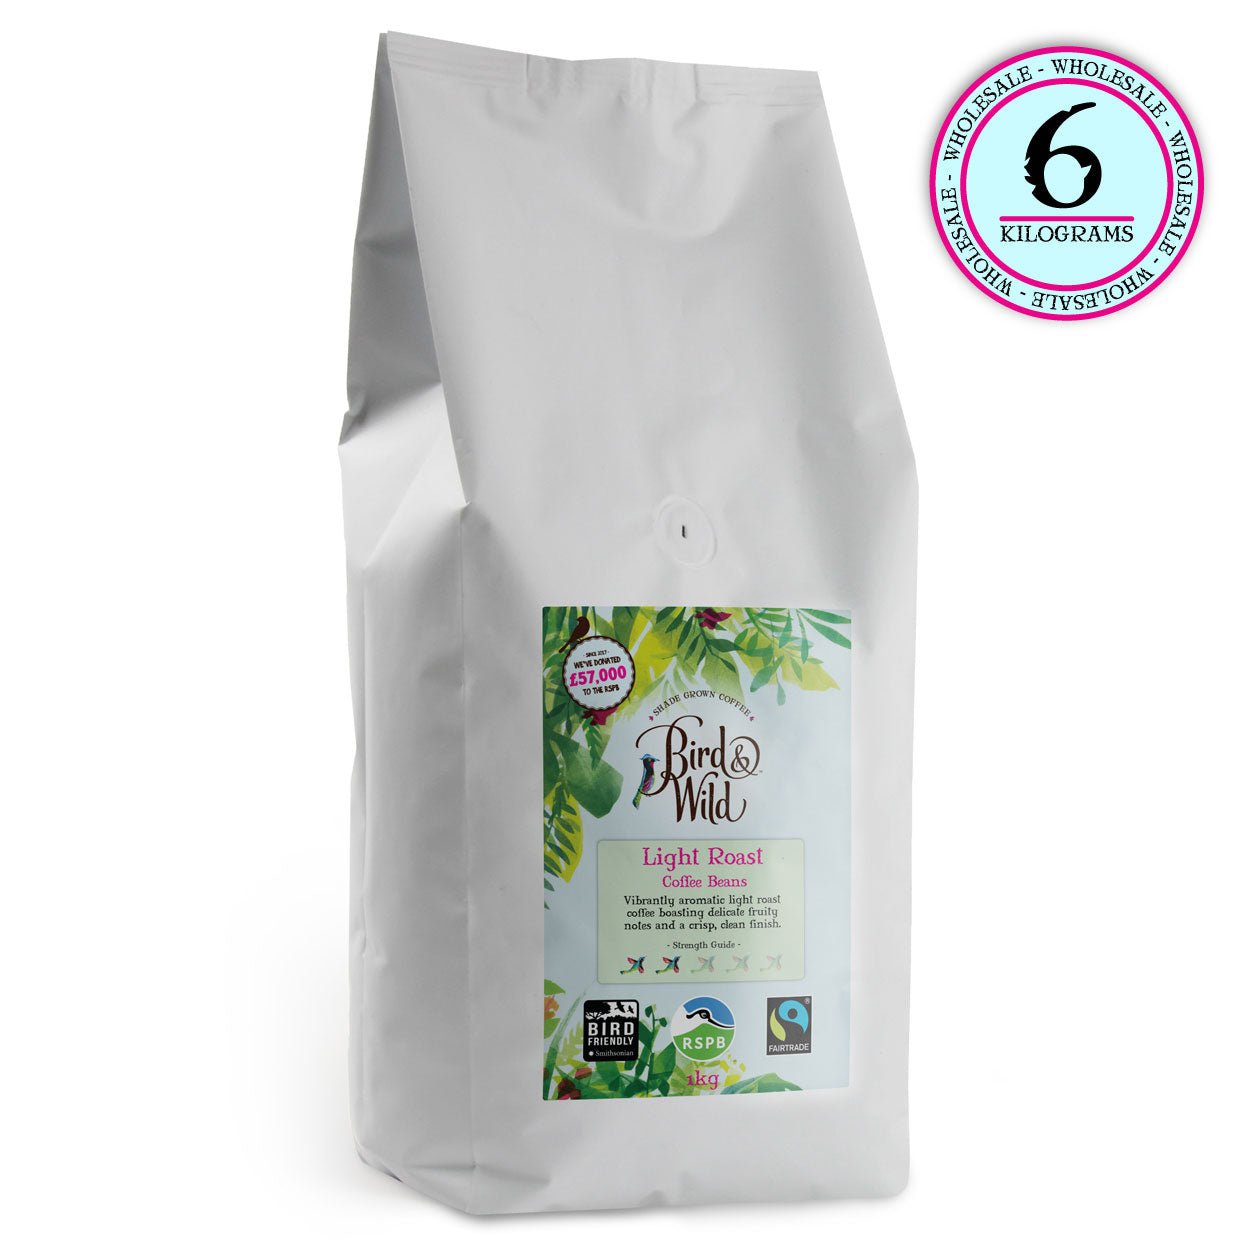 Light Roast Fairtrade Organic Coffee - Case of 6 x 1kg - Bird & Wild Coffee